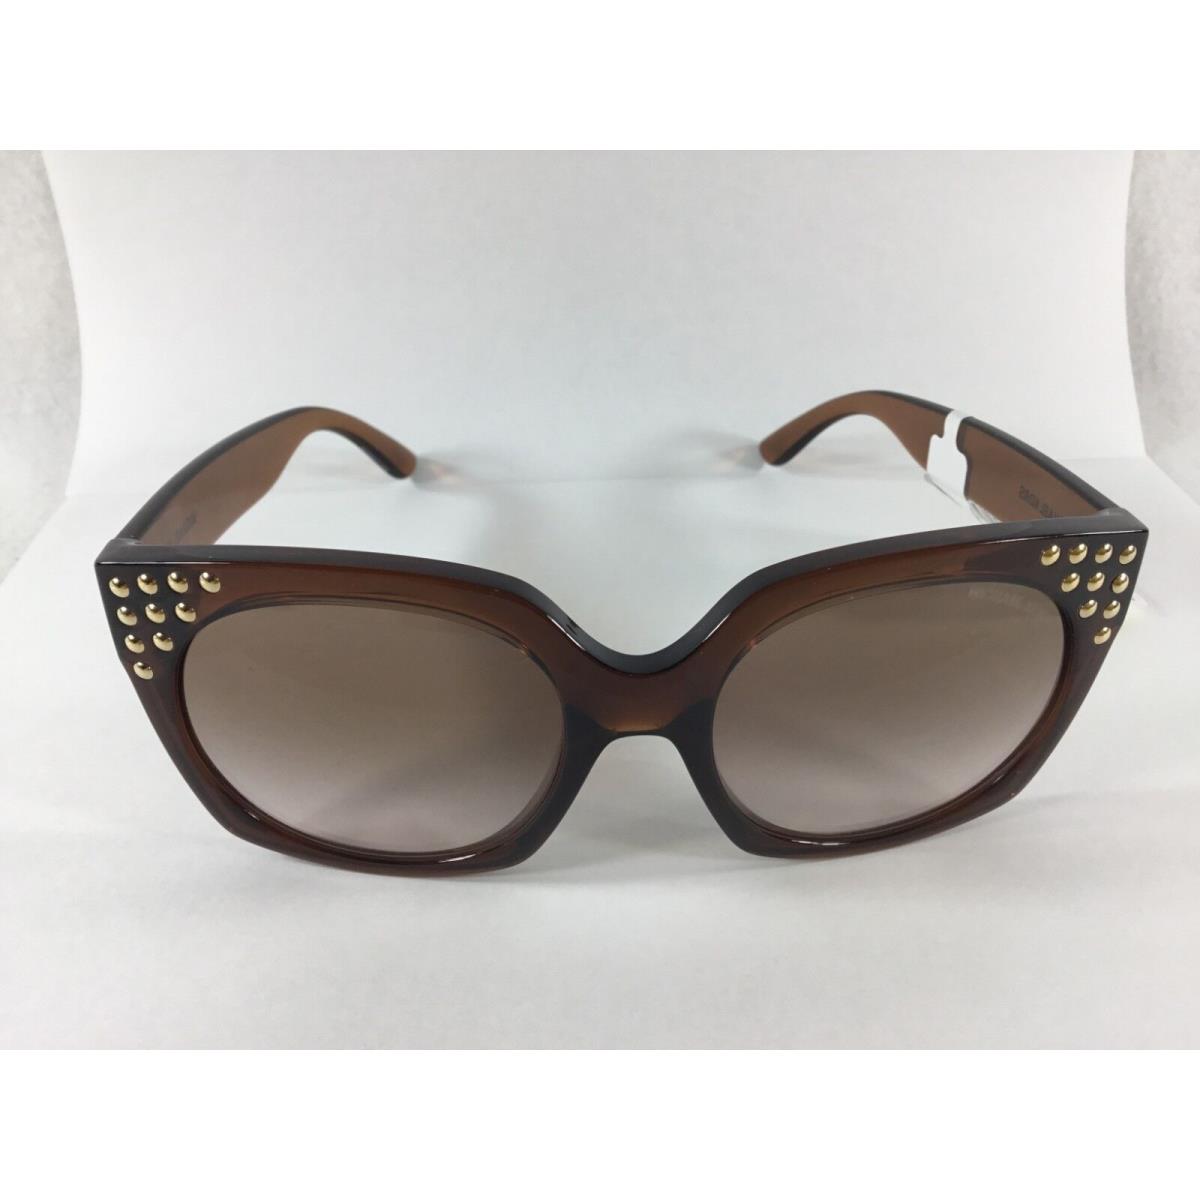 Michael Kors sunglasses  - Brown , Transparent brown and gold Frame, Brown grey Gradient Lens 1